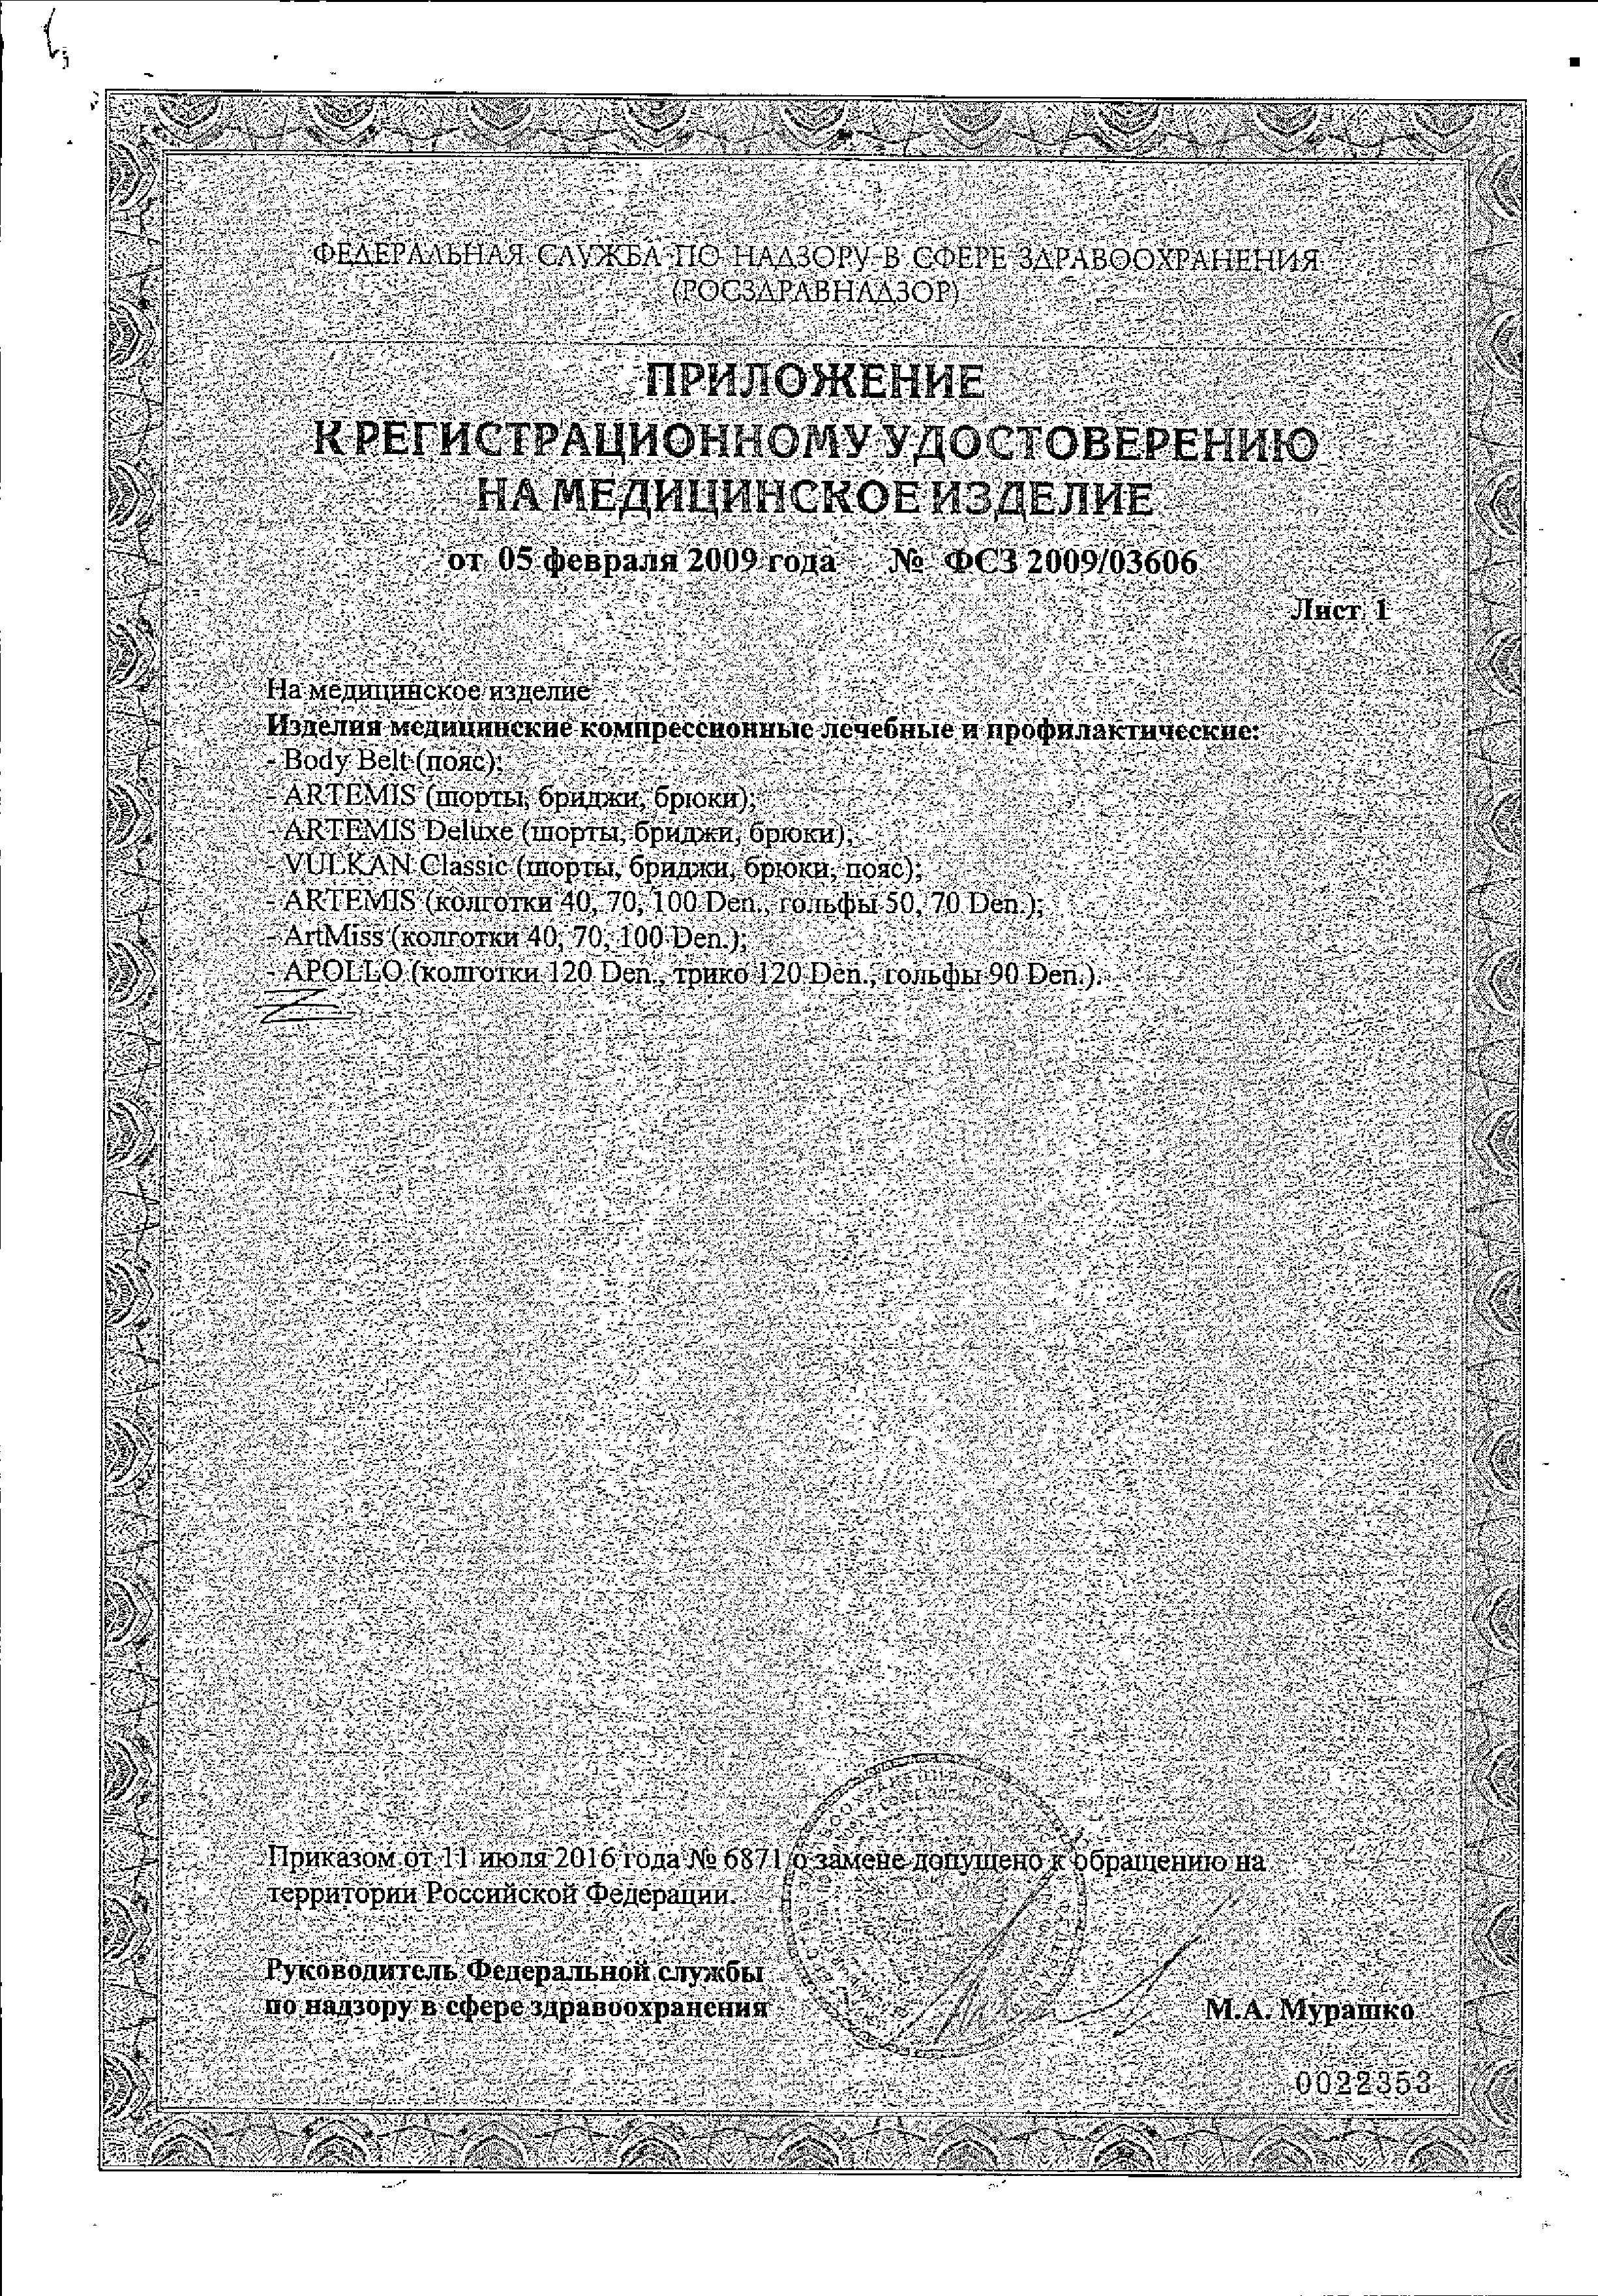 Artemis колготки антиварикозные сертификат